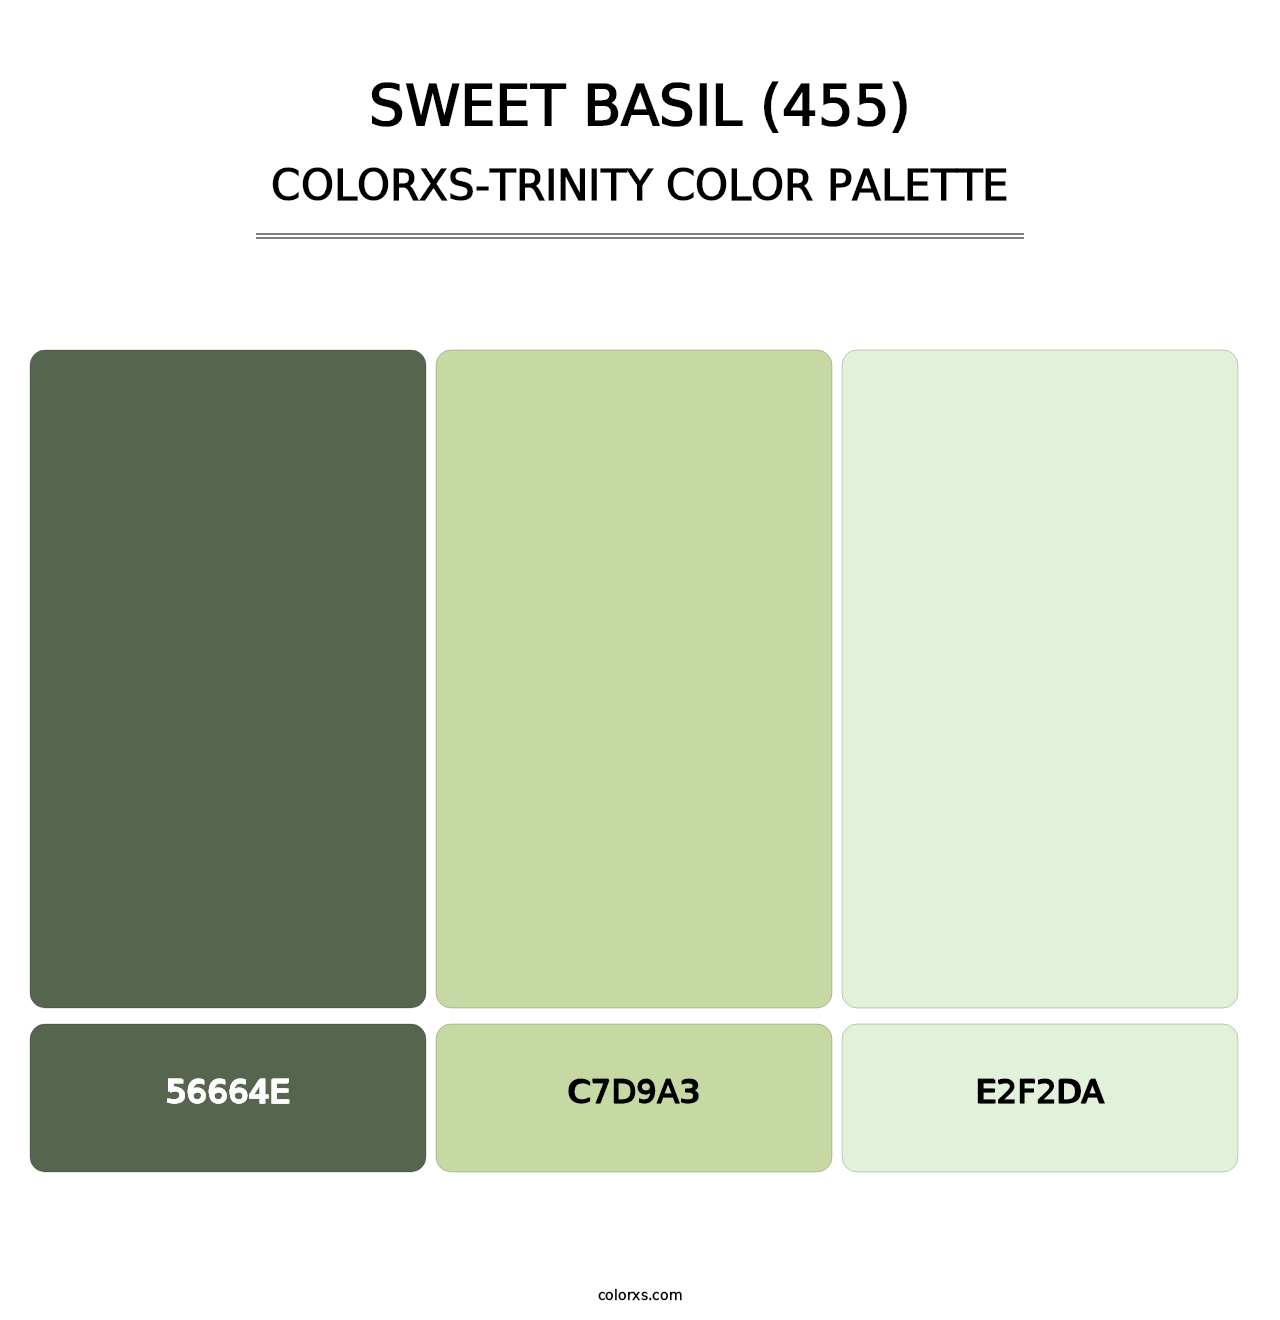 Sweet Basil (455) - Colorxs Trinity Palette